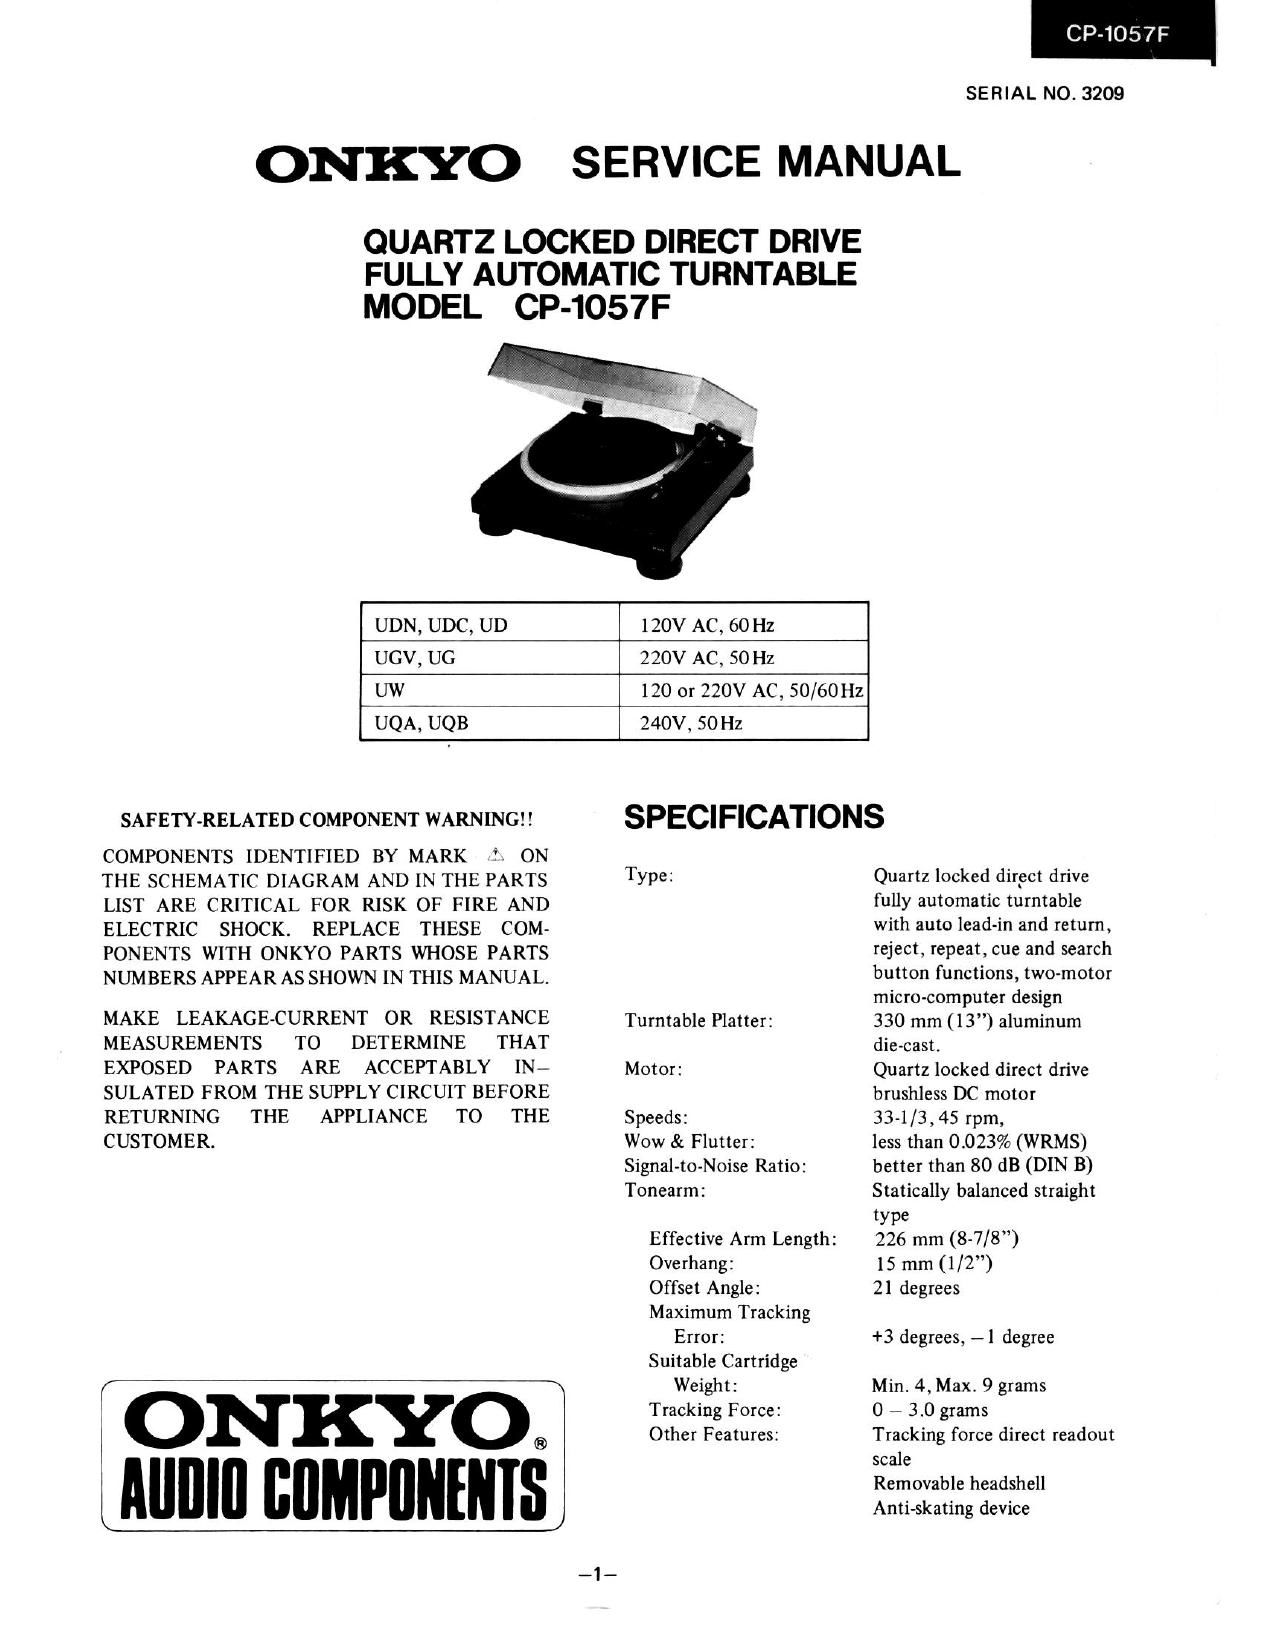 Onkyo CP 1057 F Service Manual